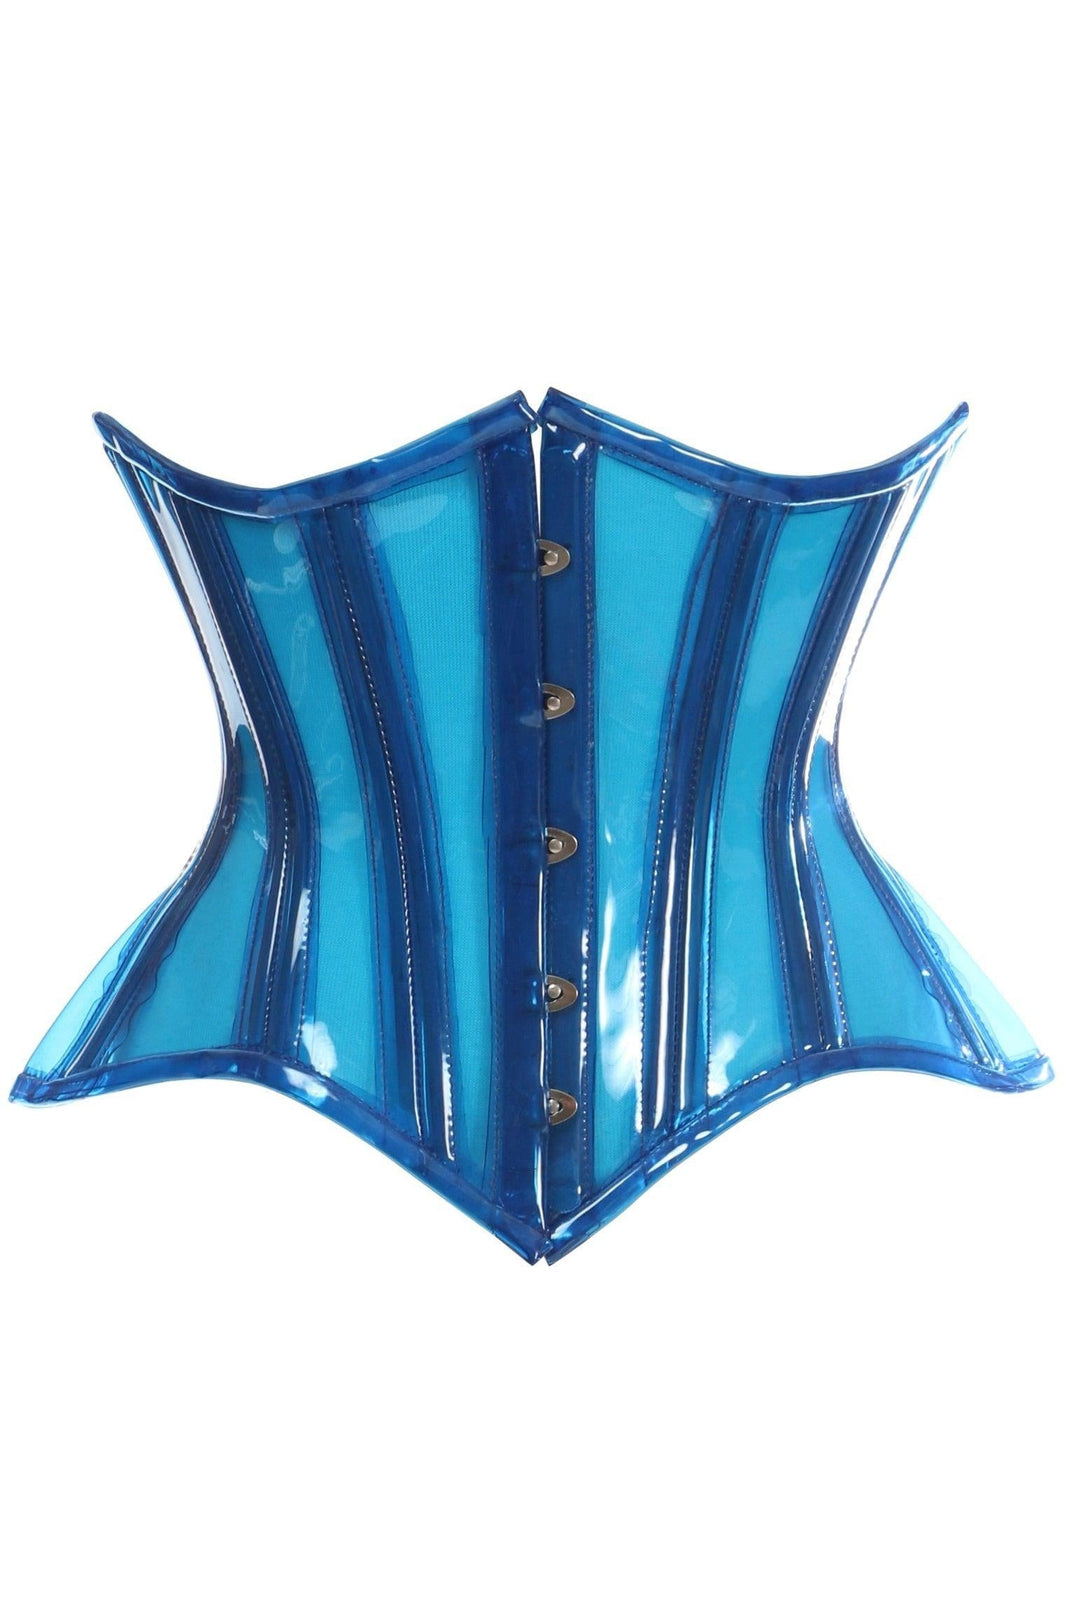 Blue Clear Curvy Underbust Waist Cincher Corset-Waist Cincher-Daisy Corsets-Blue-2X-SEXYSHOES.COM